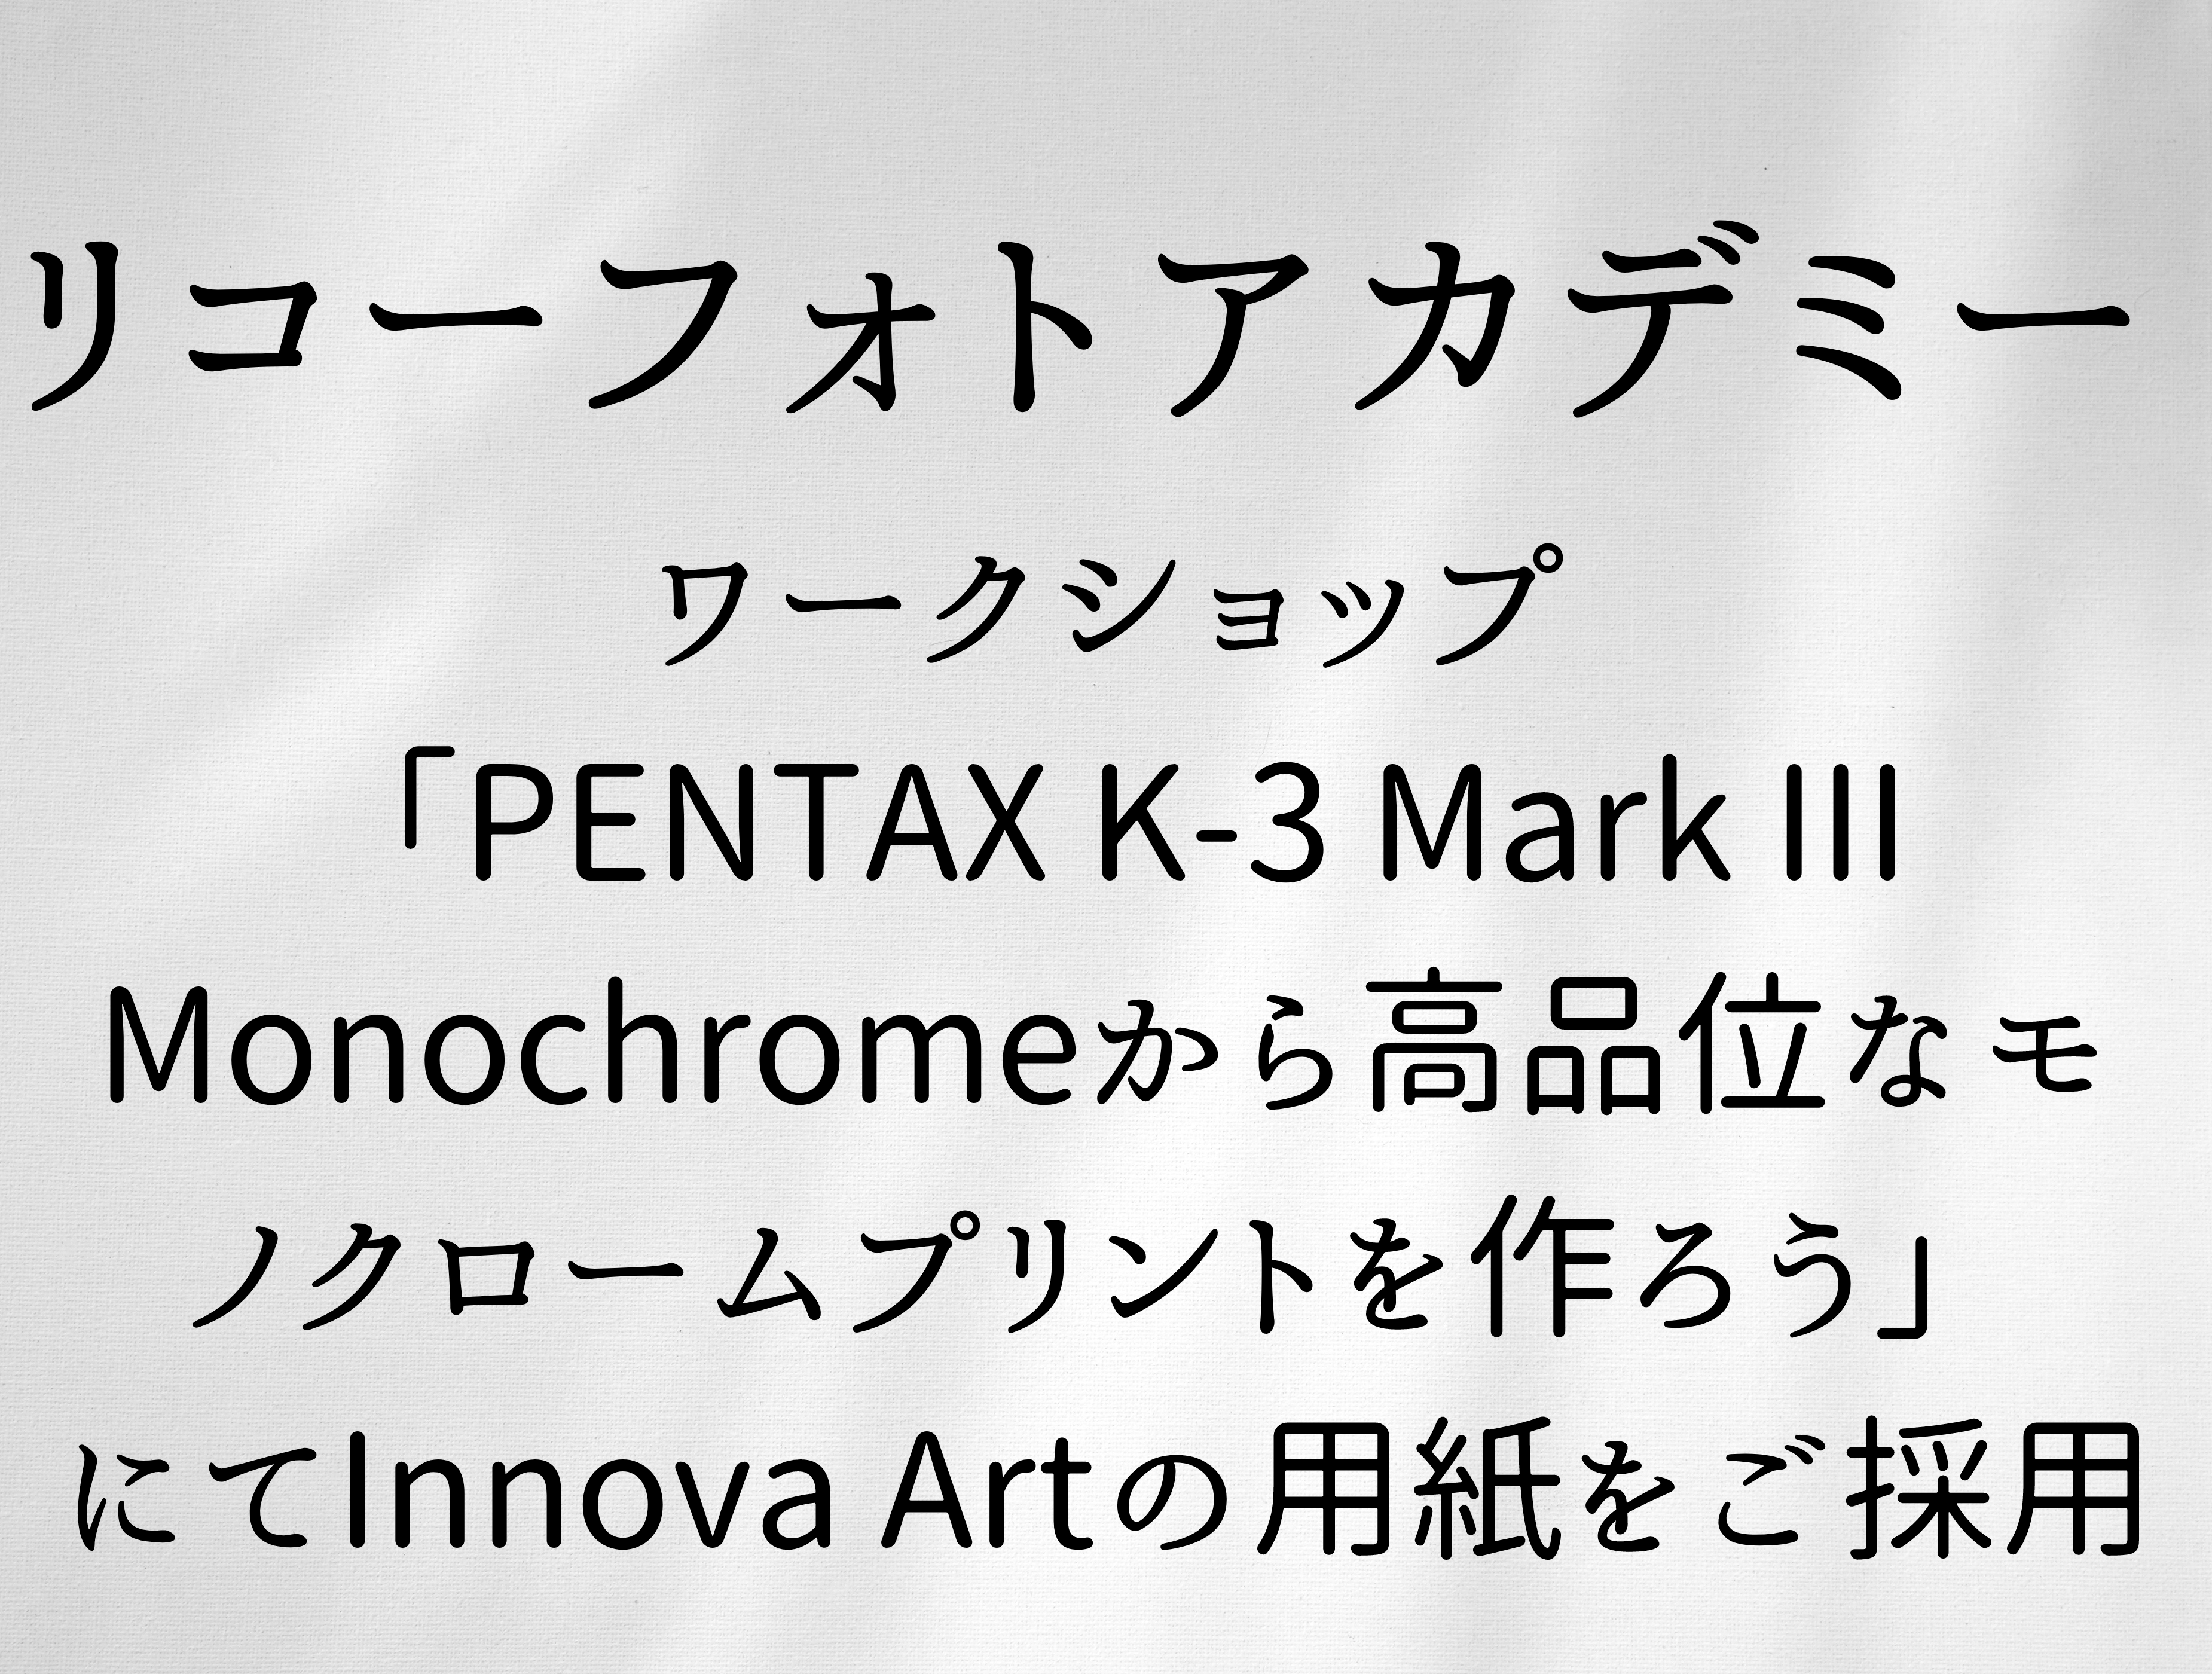 PENTAX K-3 Mark III Monochromeから 高品位なモノクロームプリントを作ろう